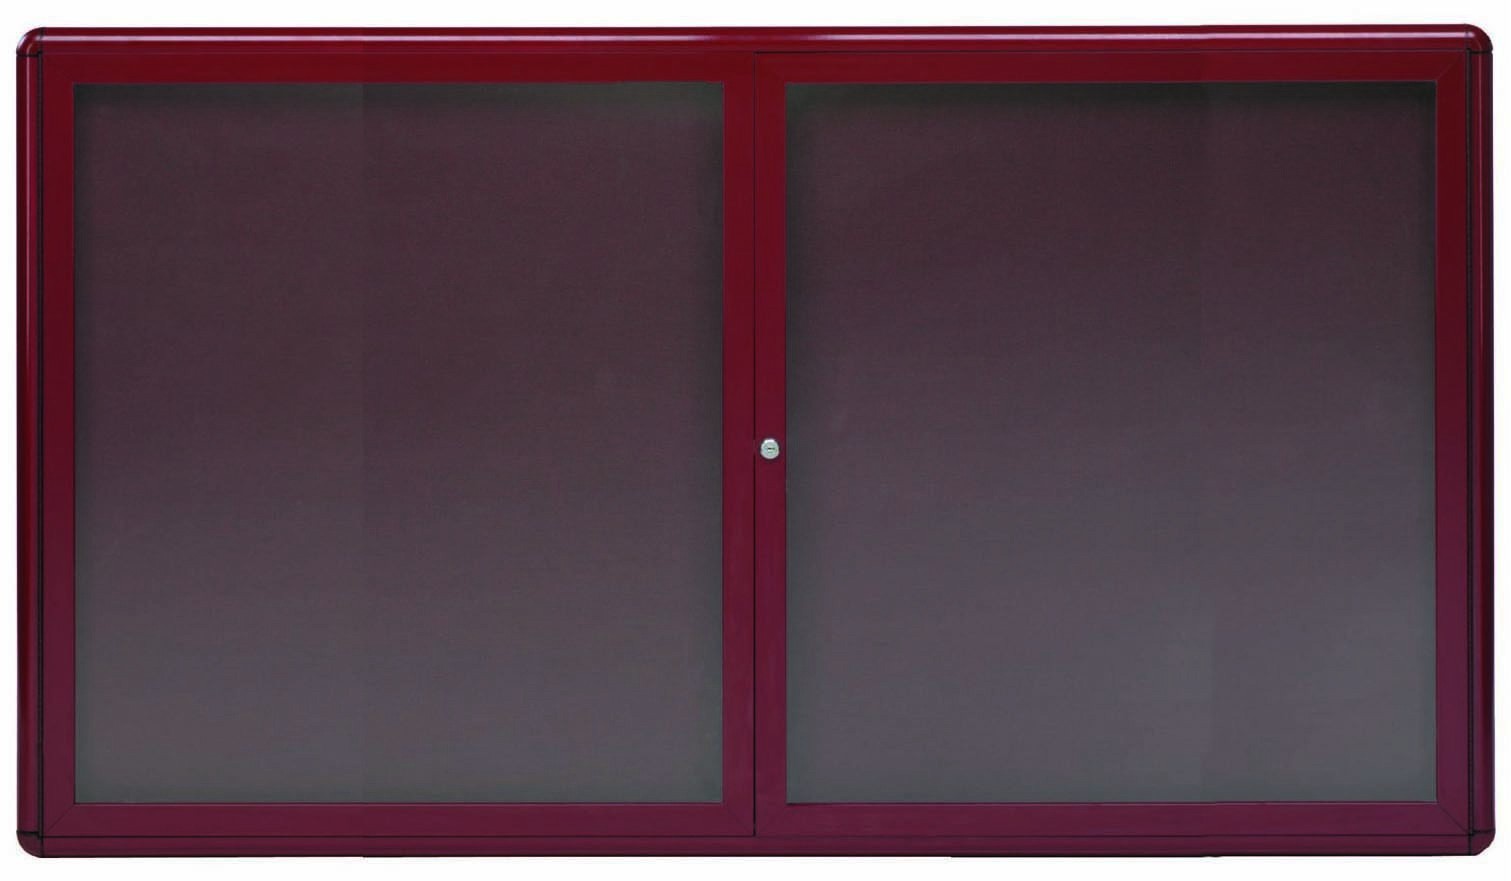 Aarco Products RAB3660BU Radius Enclosed 2-Door Bulletin Board, Burgundy/Burgundy, 60"W x 36"H